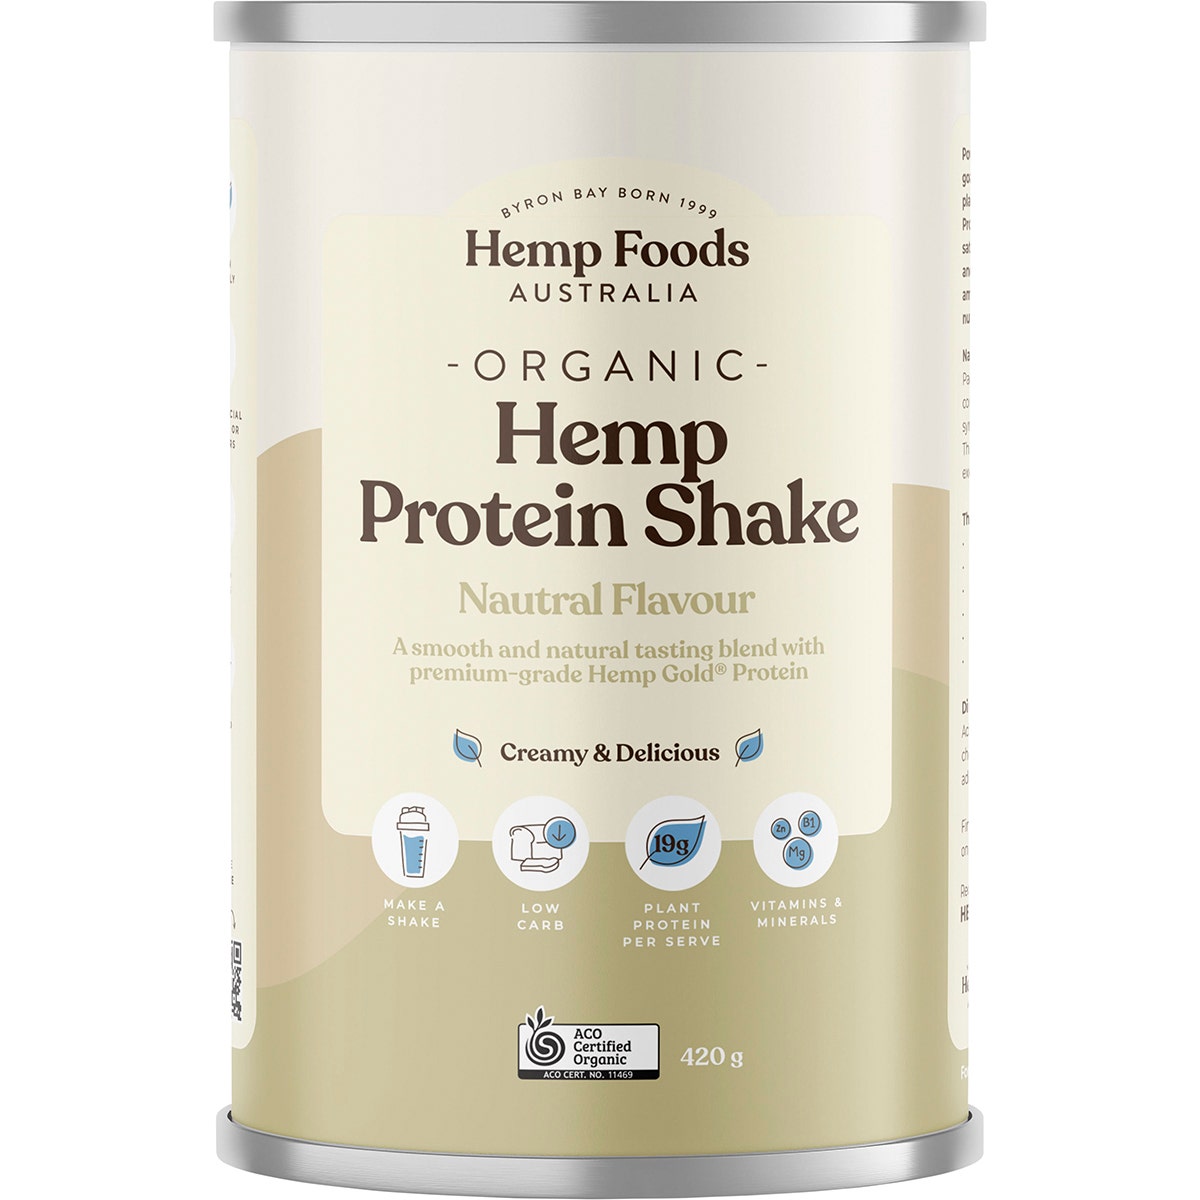 Hemp Foods Australia Organic Hemp Protein Powder 420g